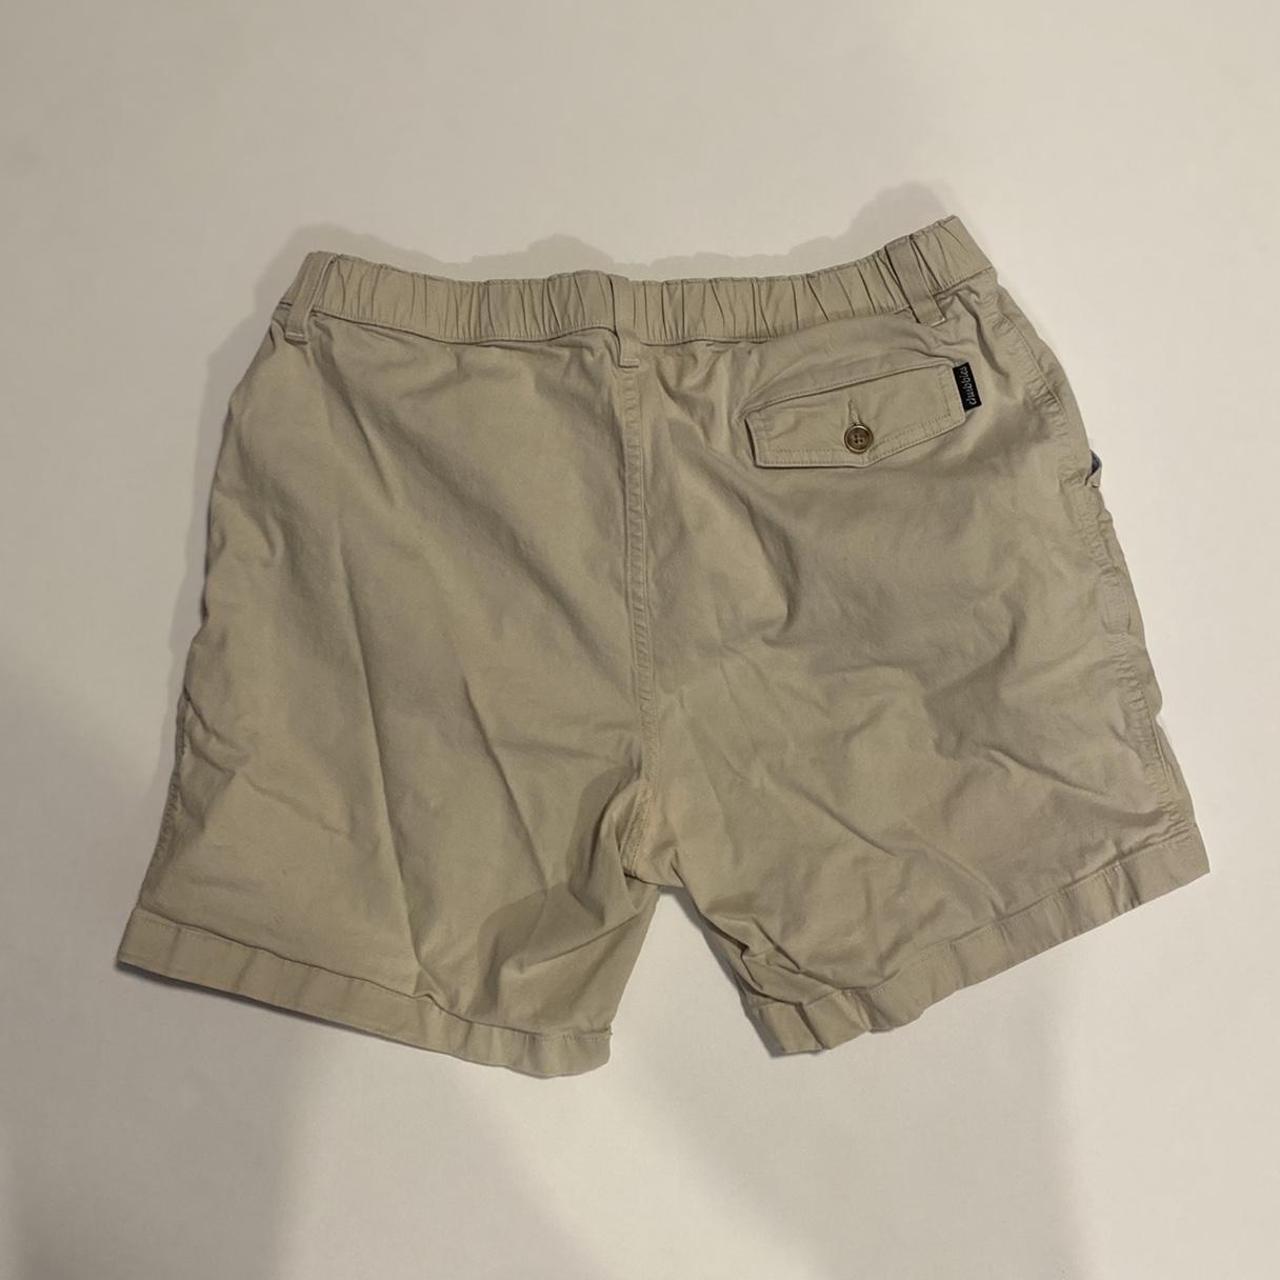 Chubbies shorts XL Khaki 7” Inseam - Depop